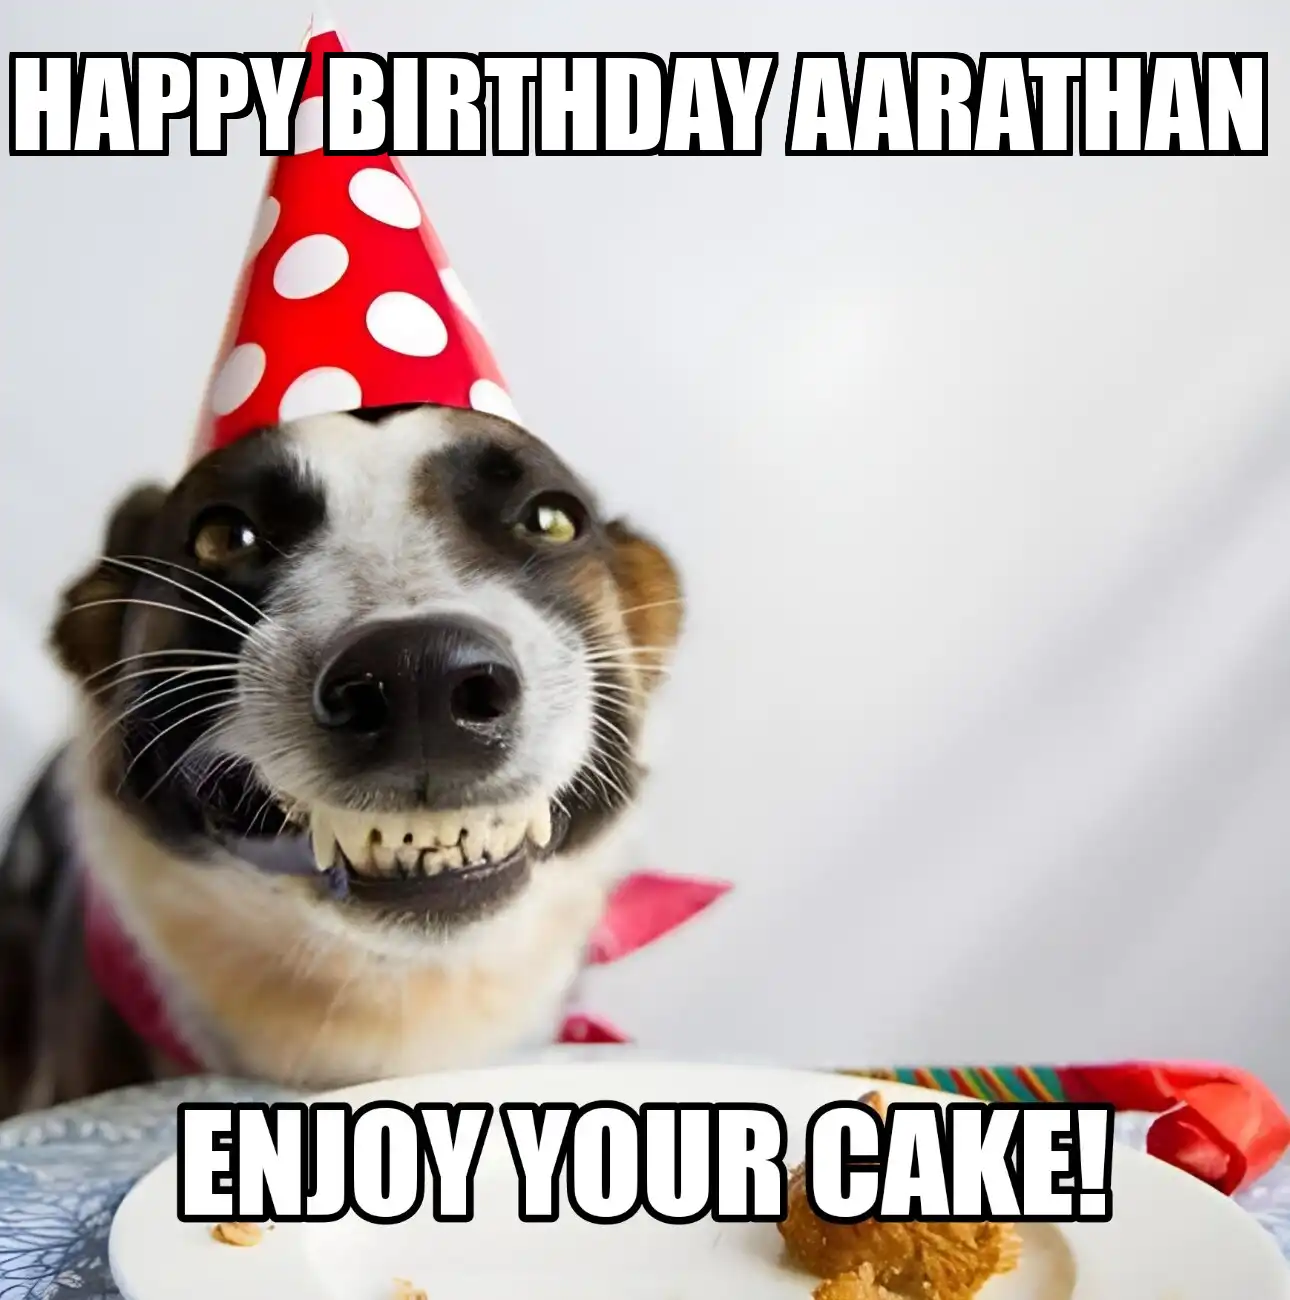 Happy Birthday Aarathan Enjoy Your Cake Dog Meme